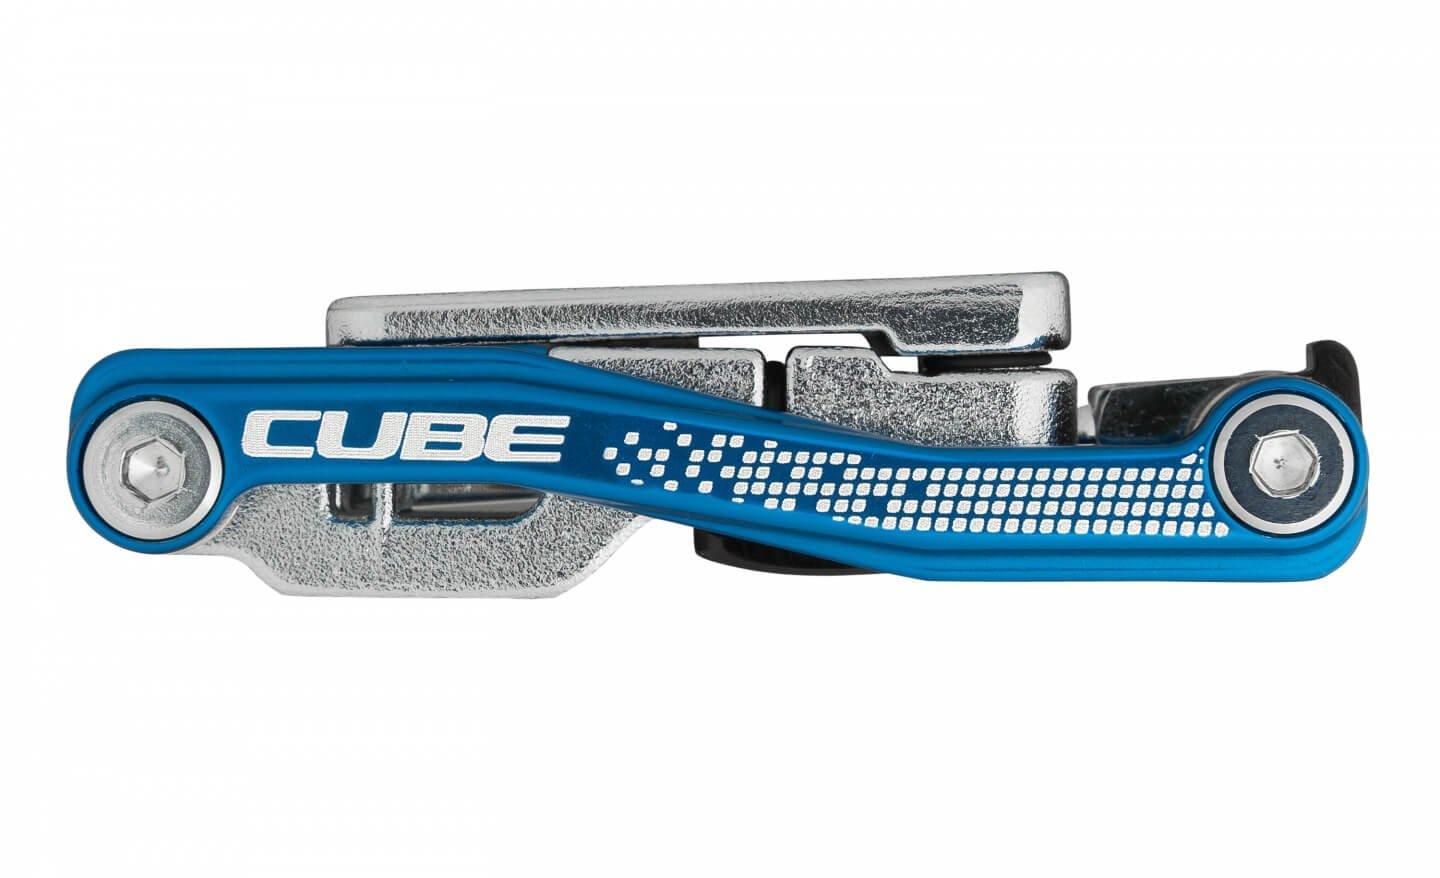 Cube Cubetool Smart blue chrom - Liquid-Life